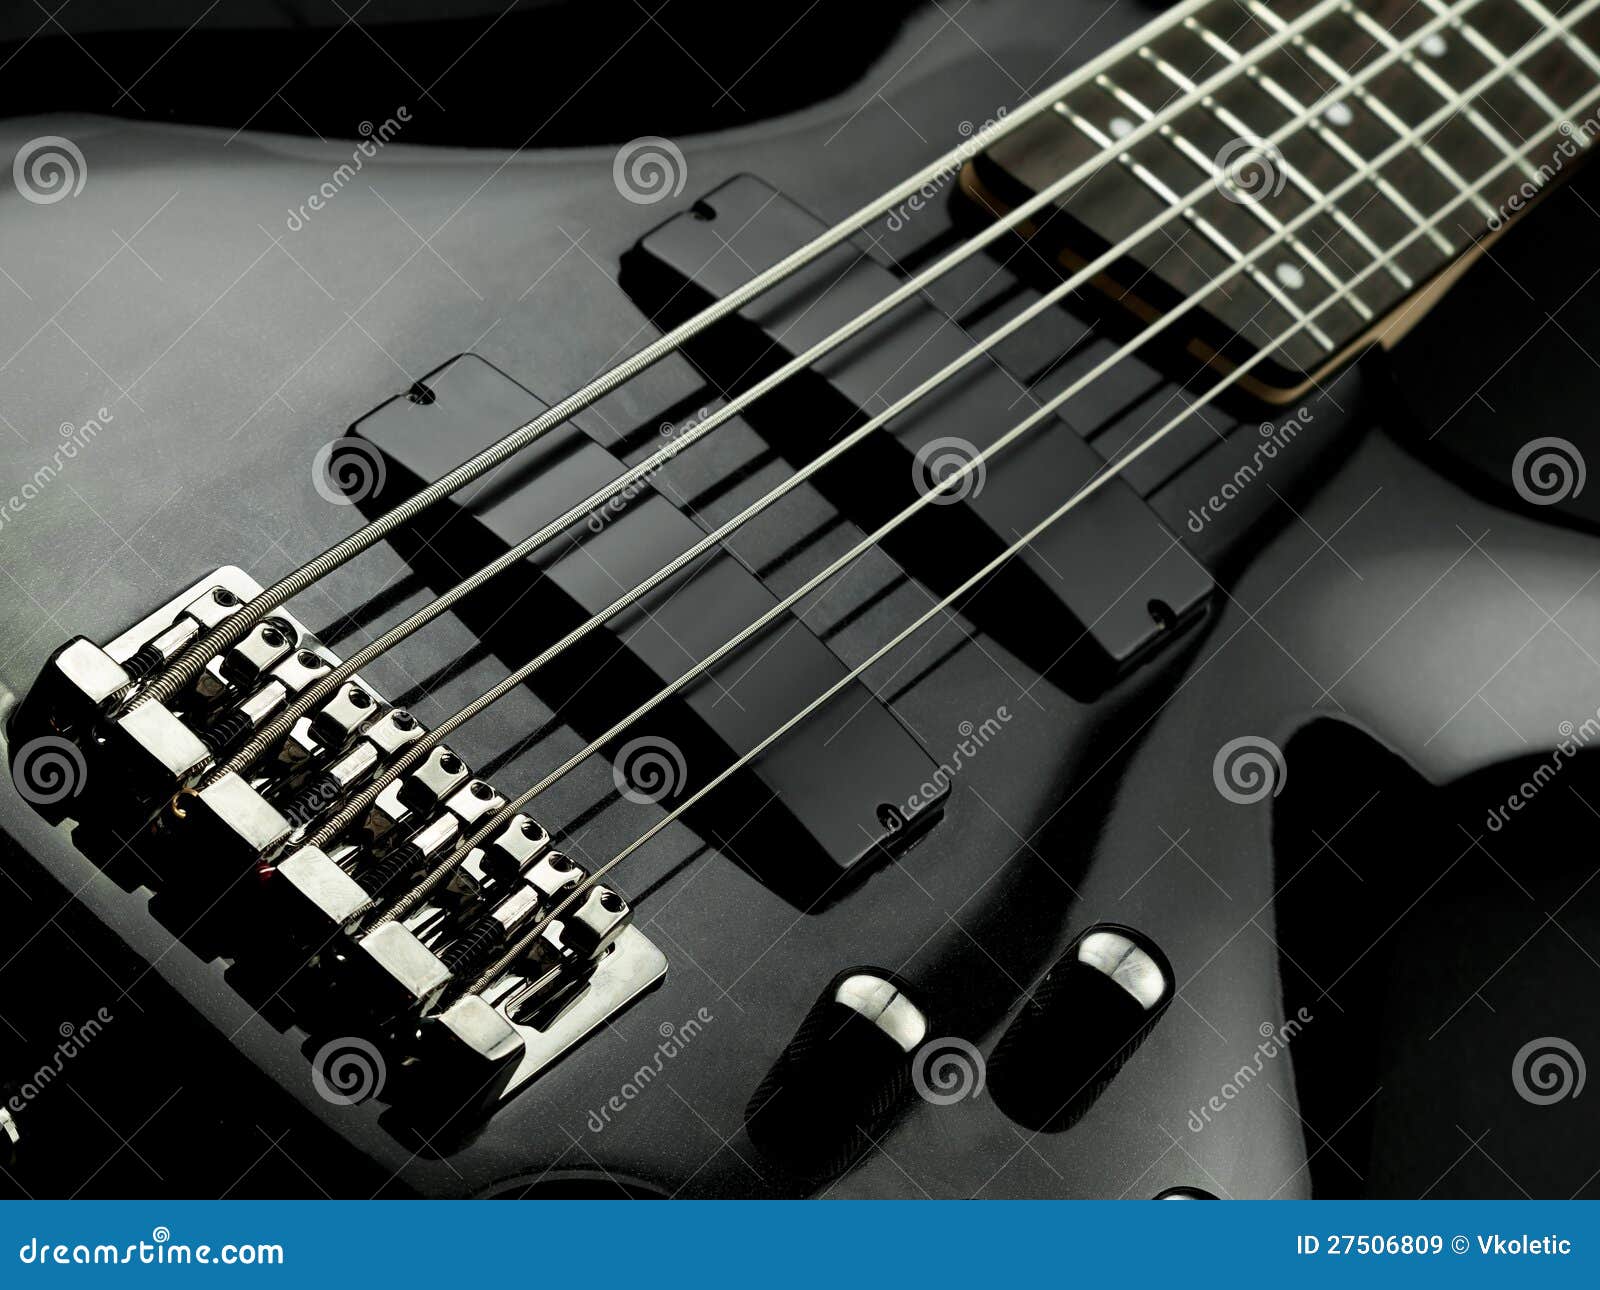 Bass Guitar Strings